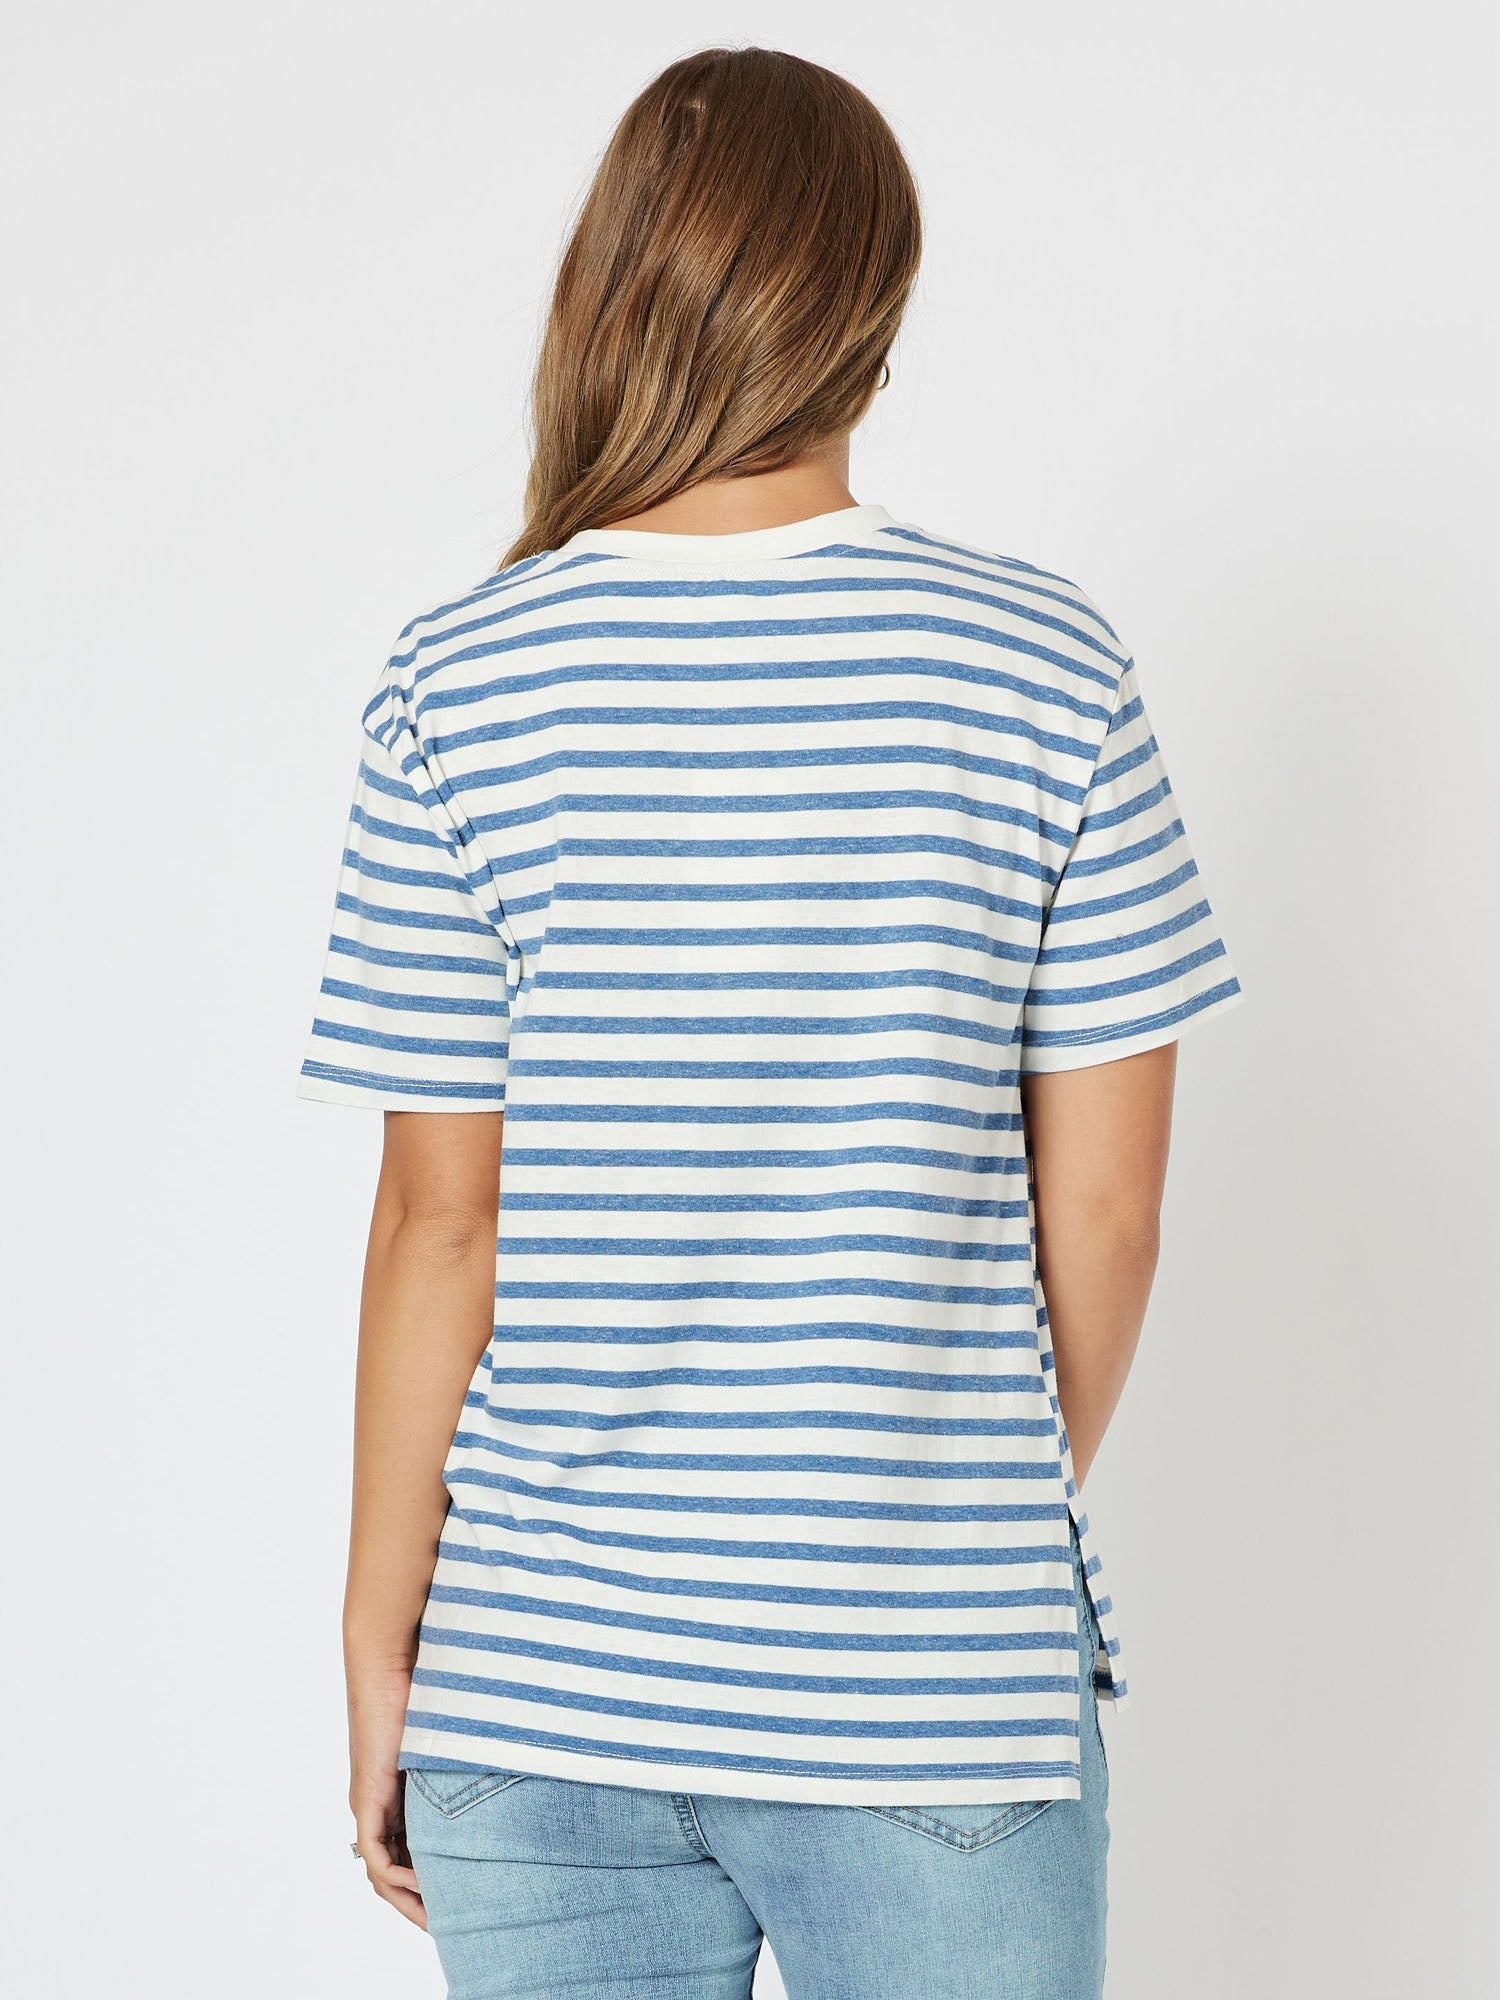 Sailor Stripe Knit Top Vneck Short Sleeve Tshirt - Blue/White